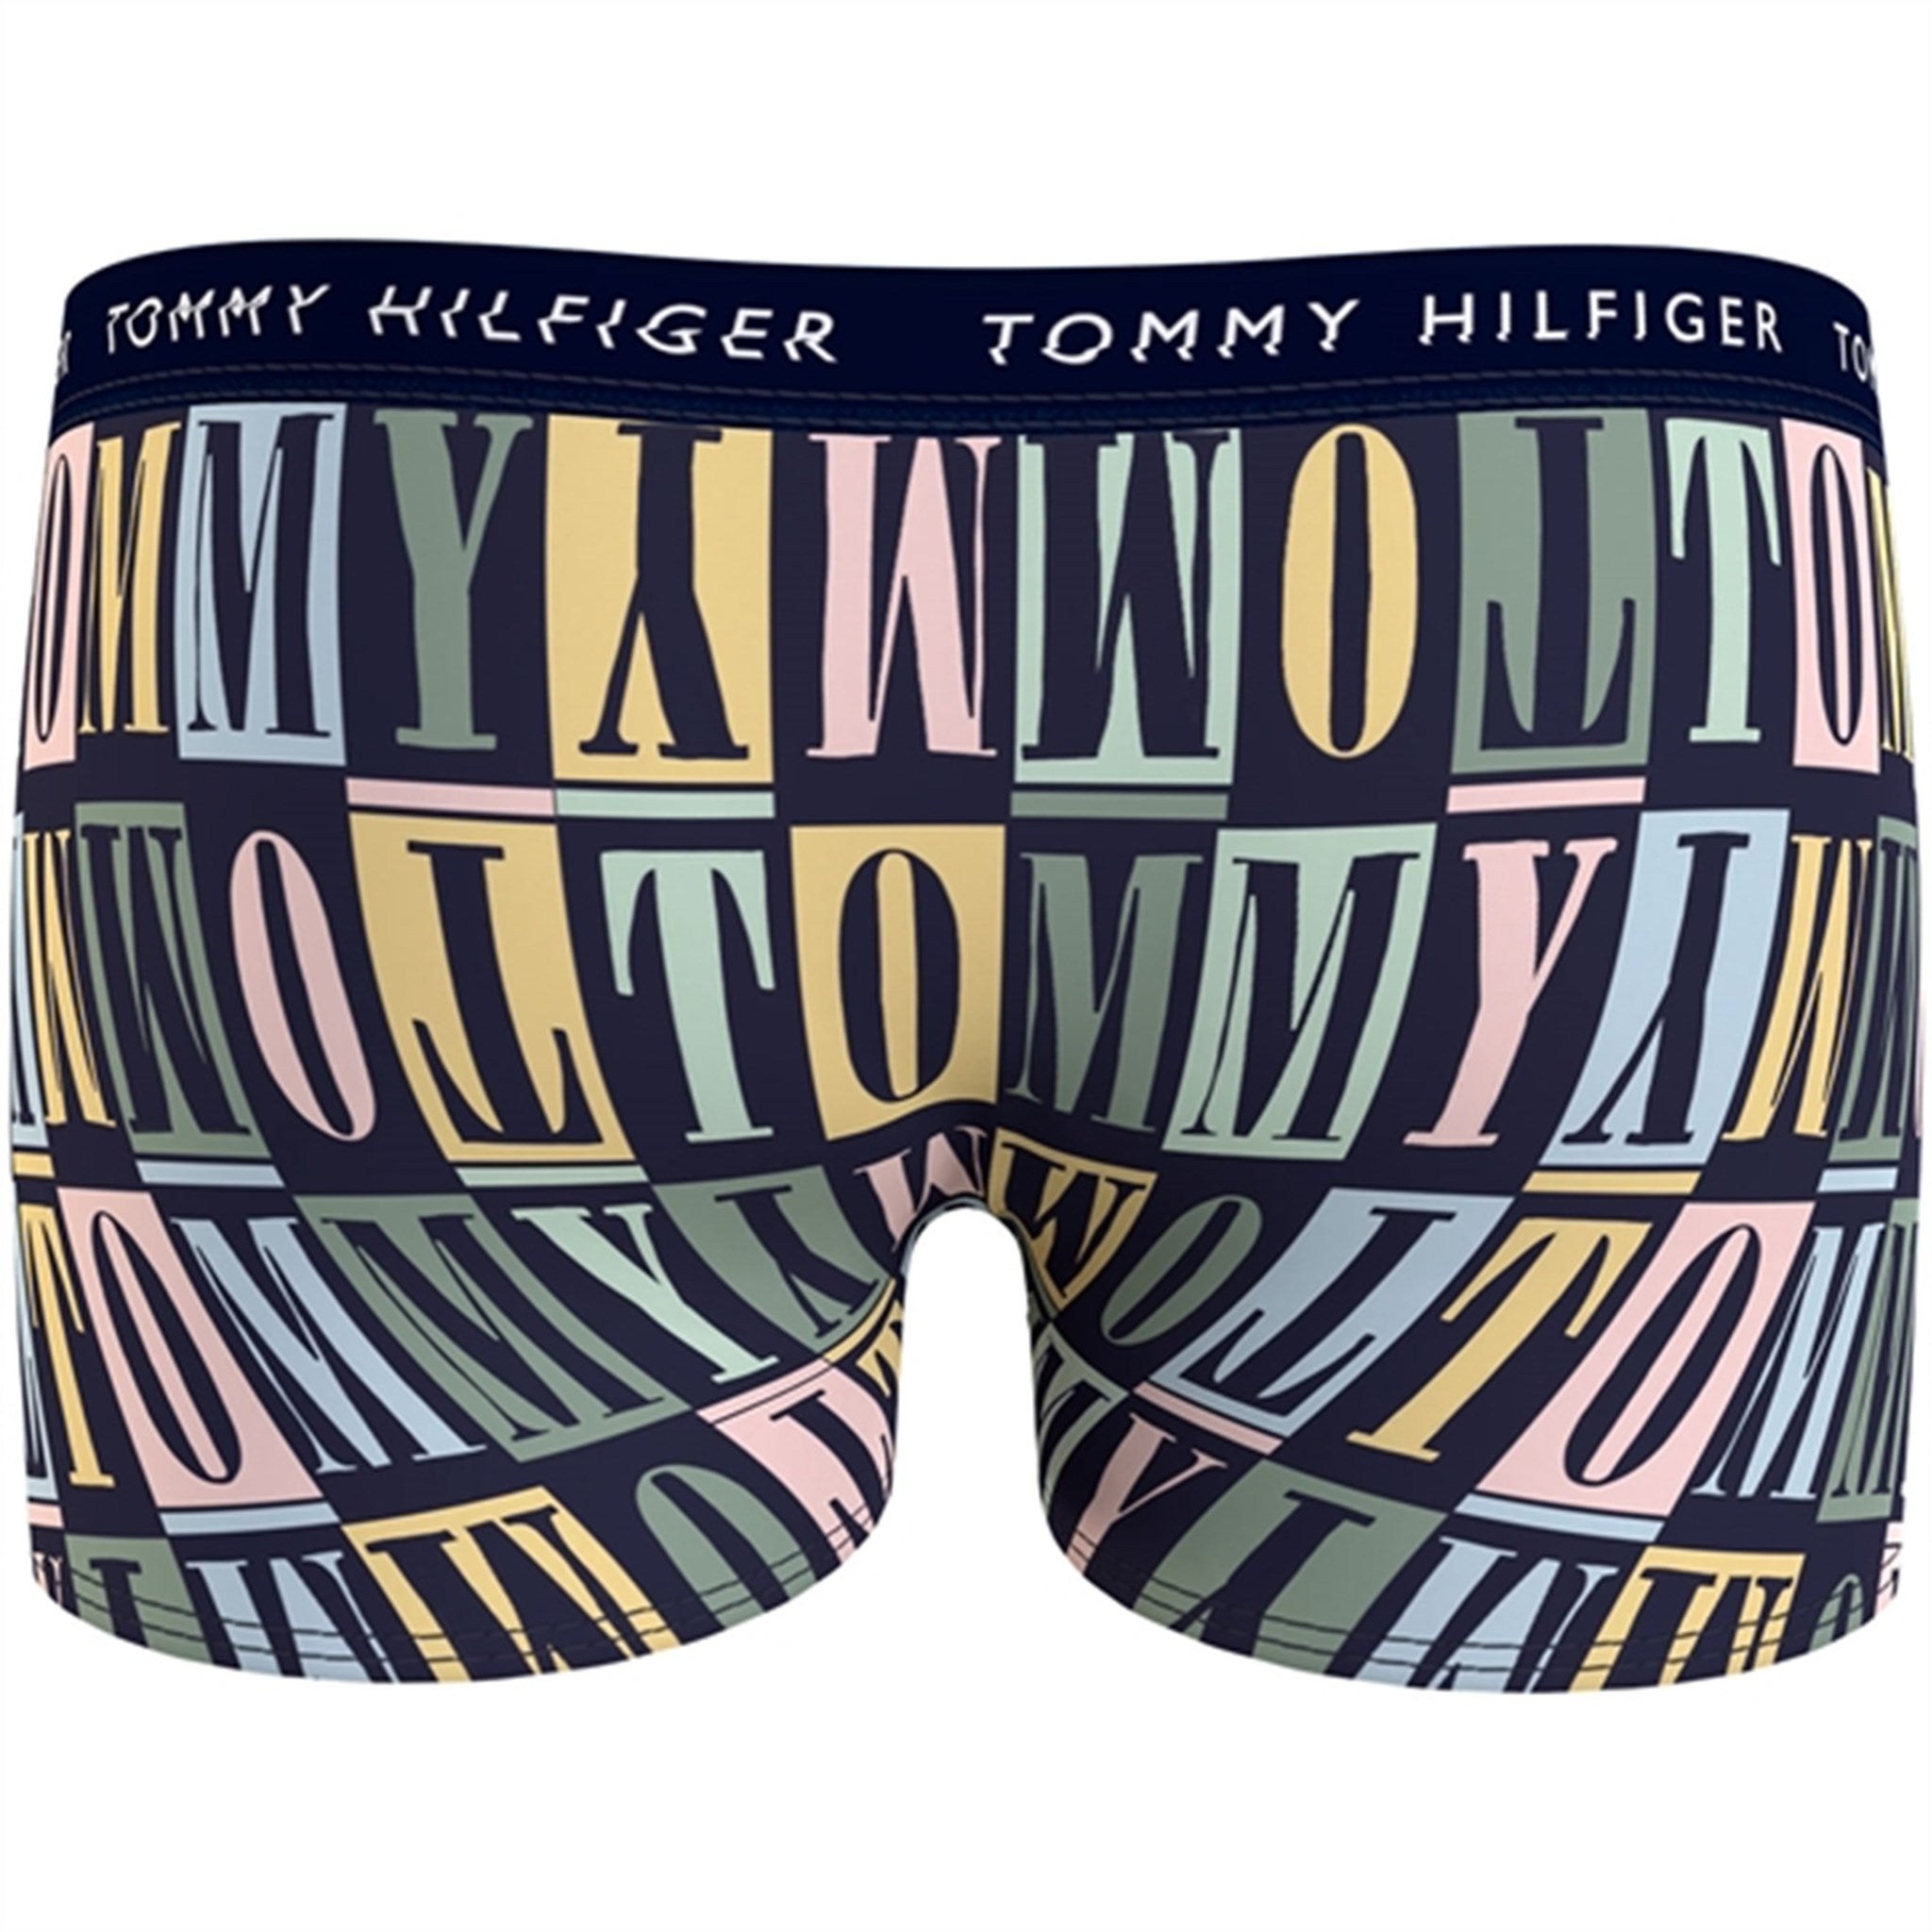 Tommy Hilfiger Boxershorts 3-pack Type Prnt/Twi Navy/Minty 3